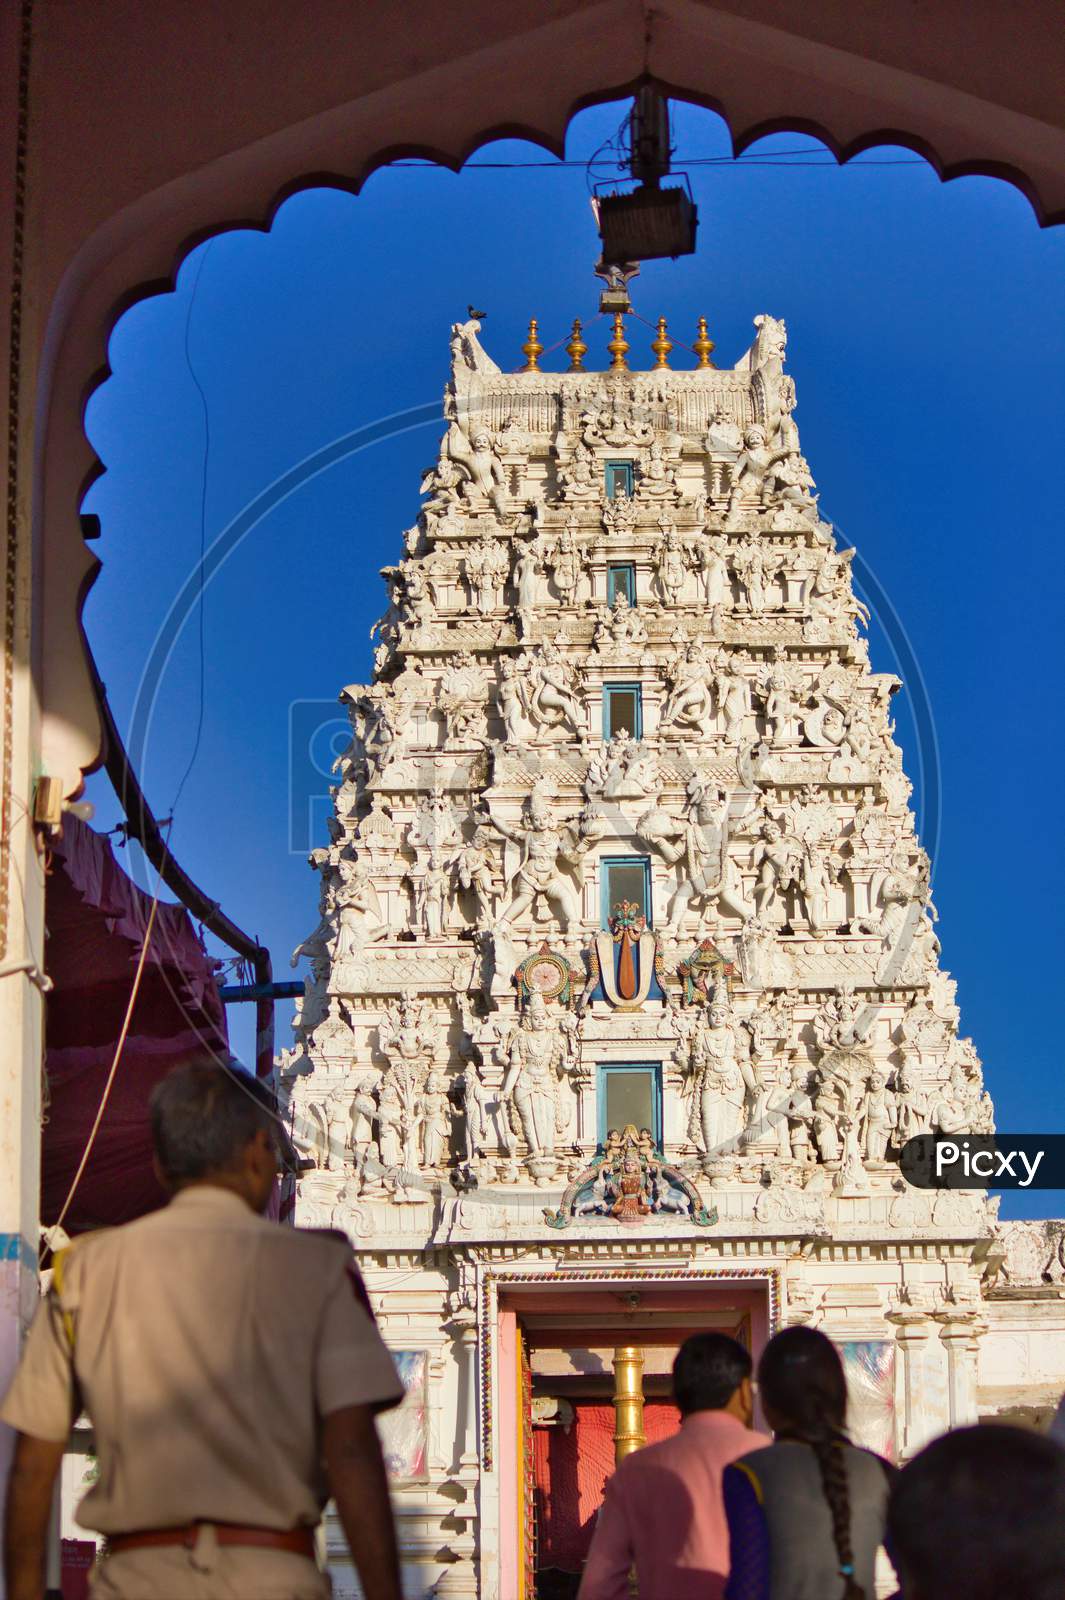 Sri Rangnath Swamy Temple Or Purana Rangji Mandir Is A Hindu Temple In Pushkar In Rajasthan State Of India. The Ornate Tower Against Blue Sky